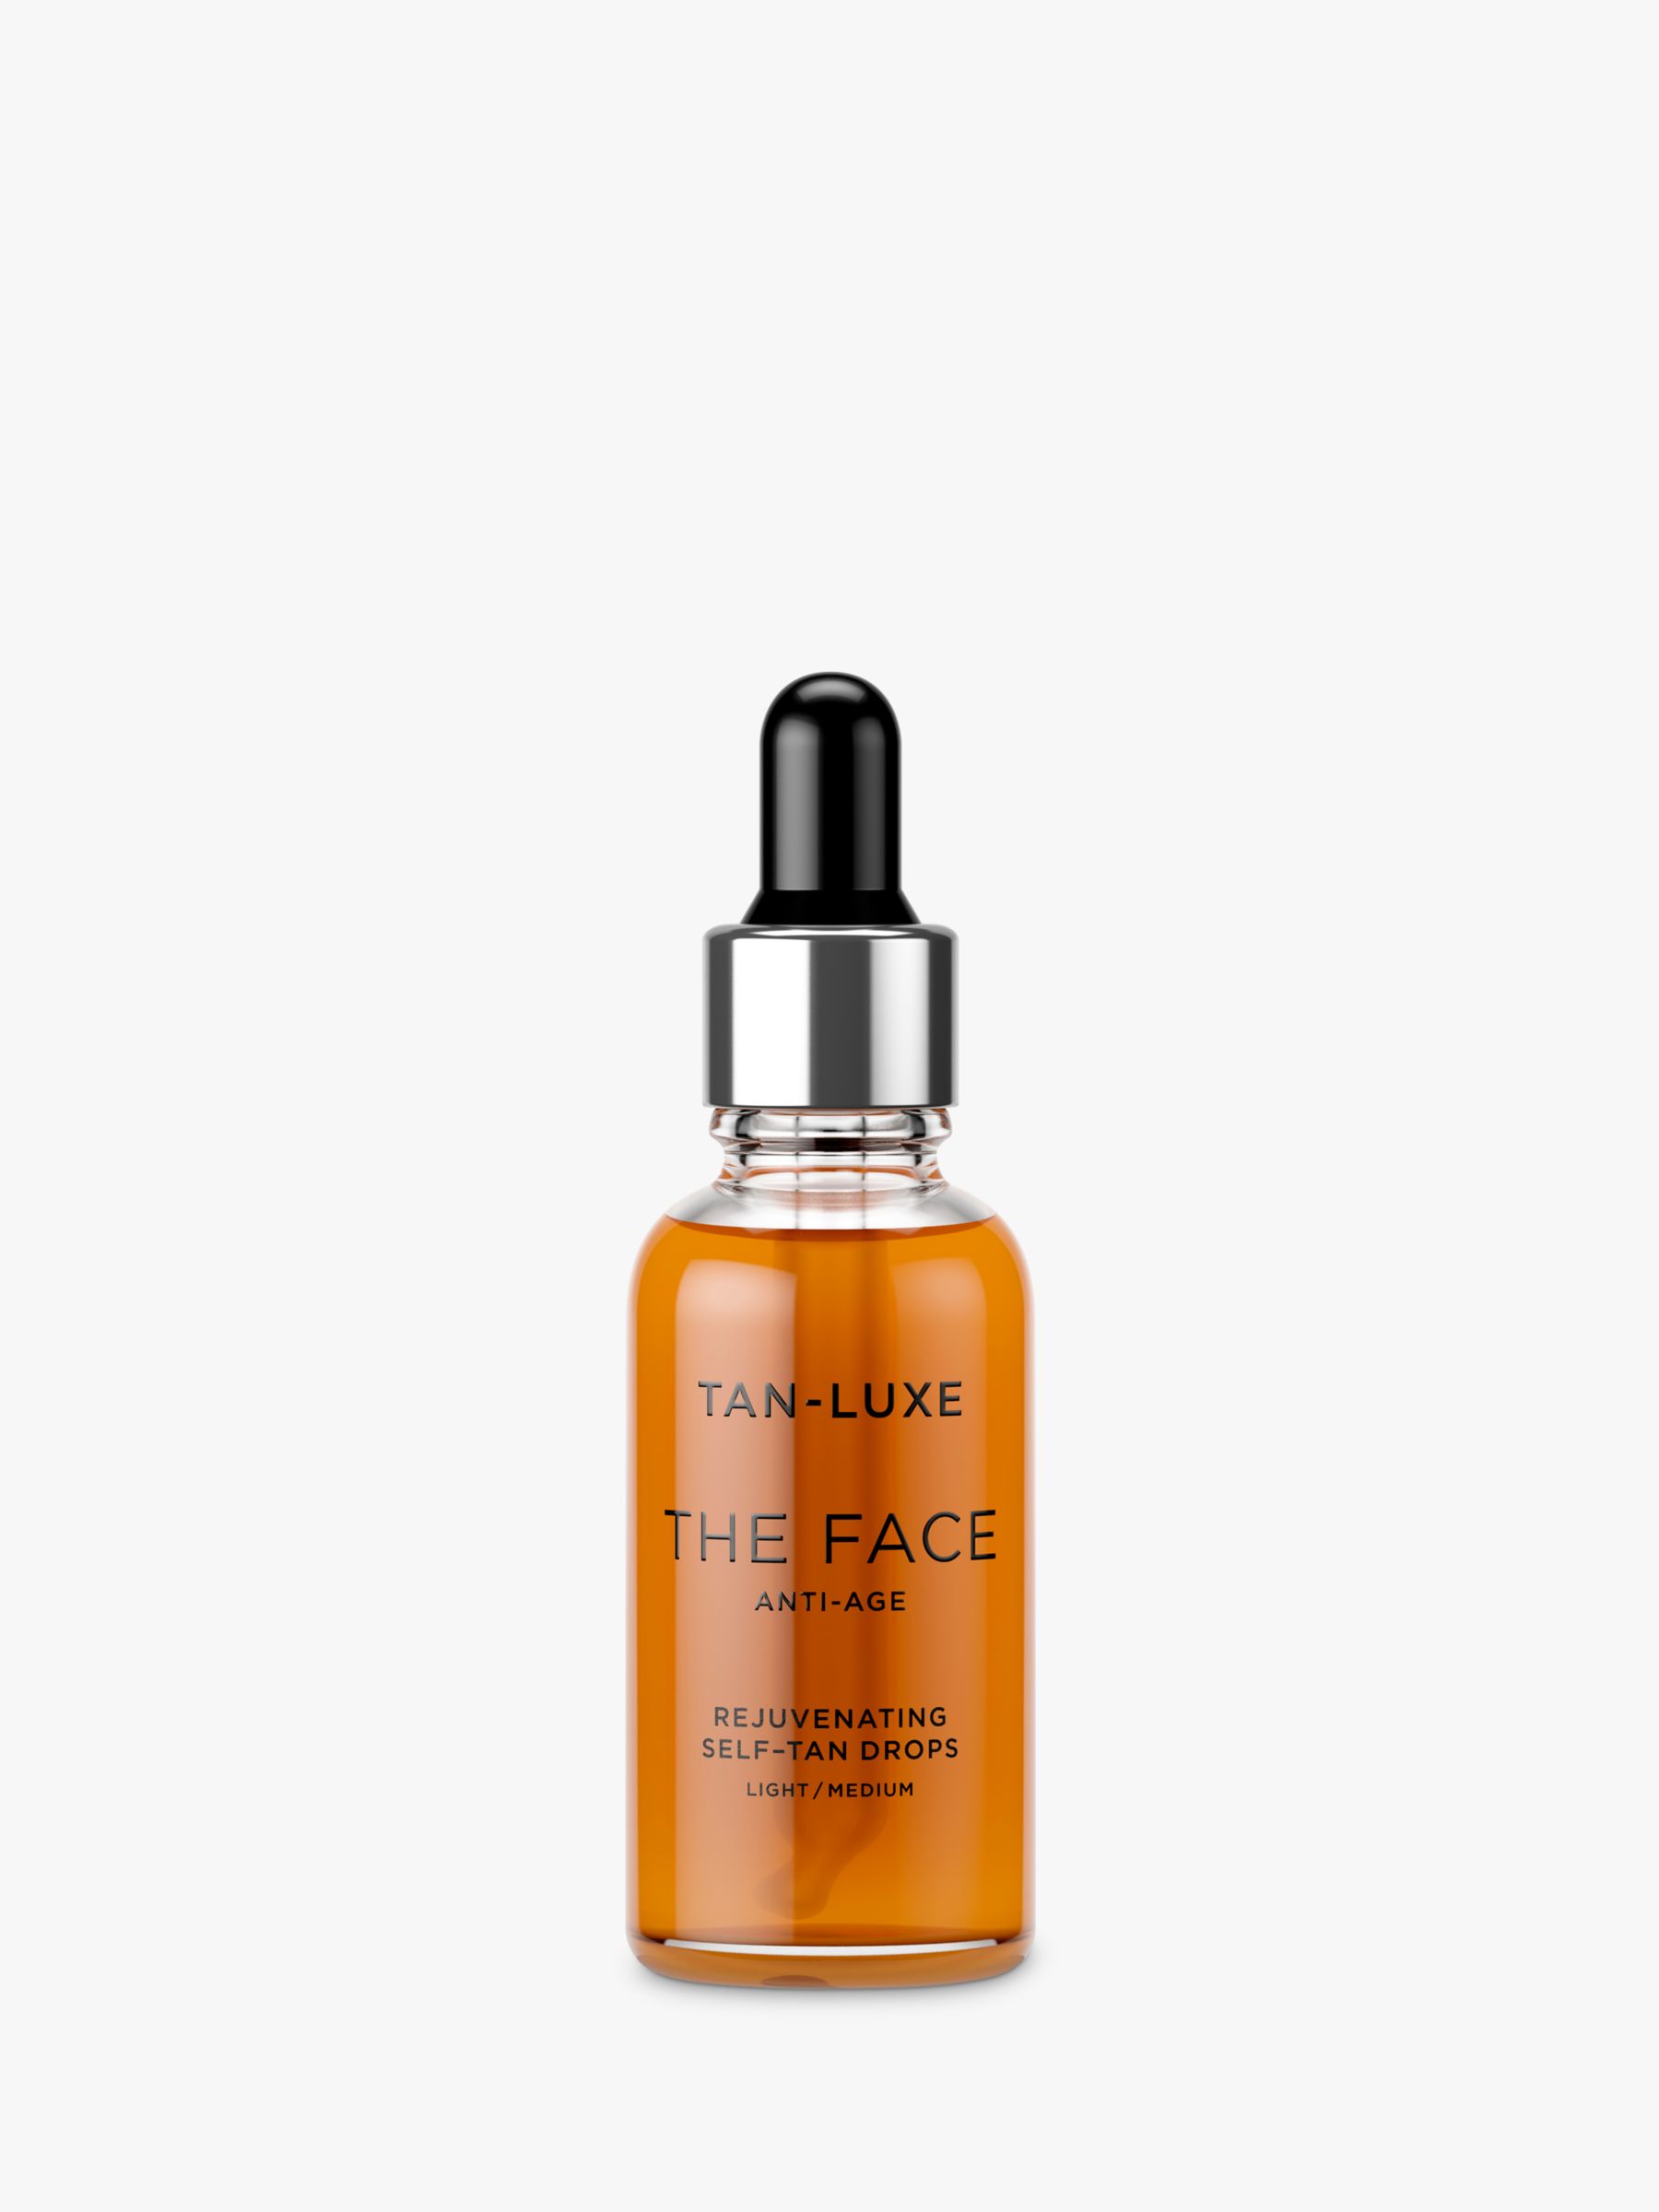 Tan-Luxe The Face Anti-Age Rejuvenating Self-Tan Drops, Light/Medium